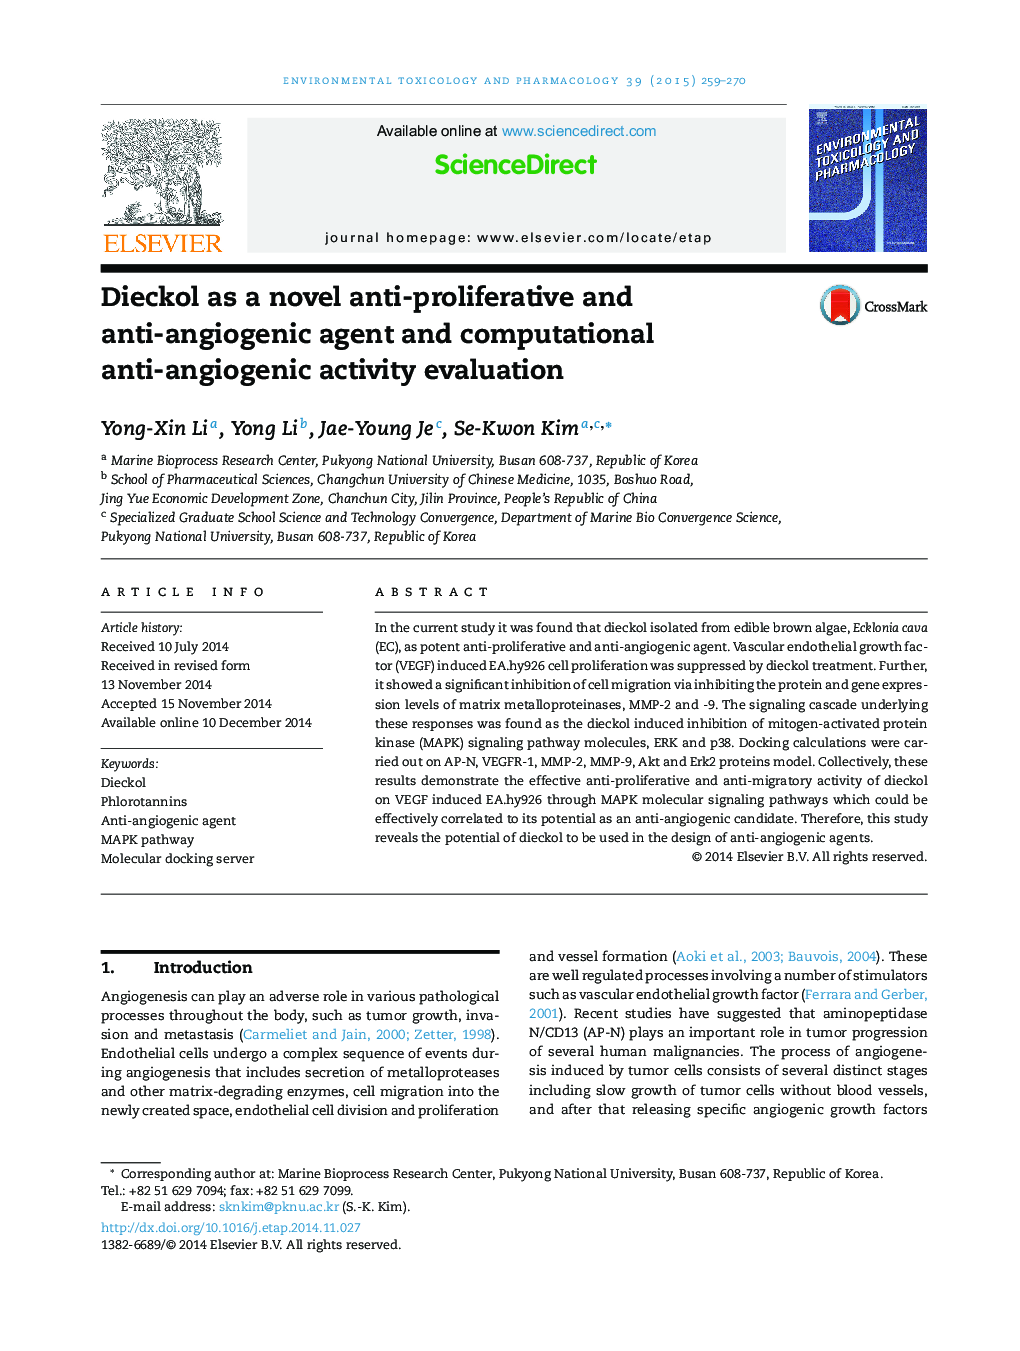 Dieckol as a novel anti-proliferative and anti-angiogenic agent and computational anti-angiogenic activity evaluation